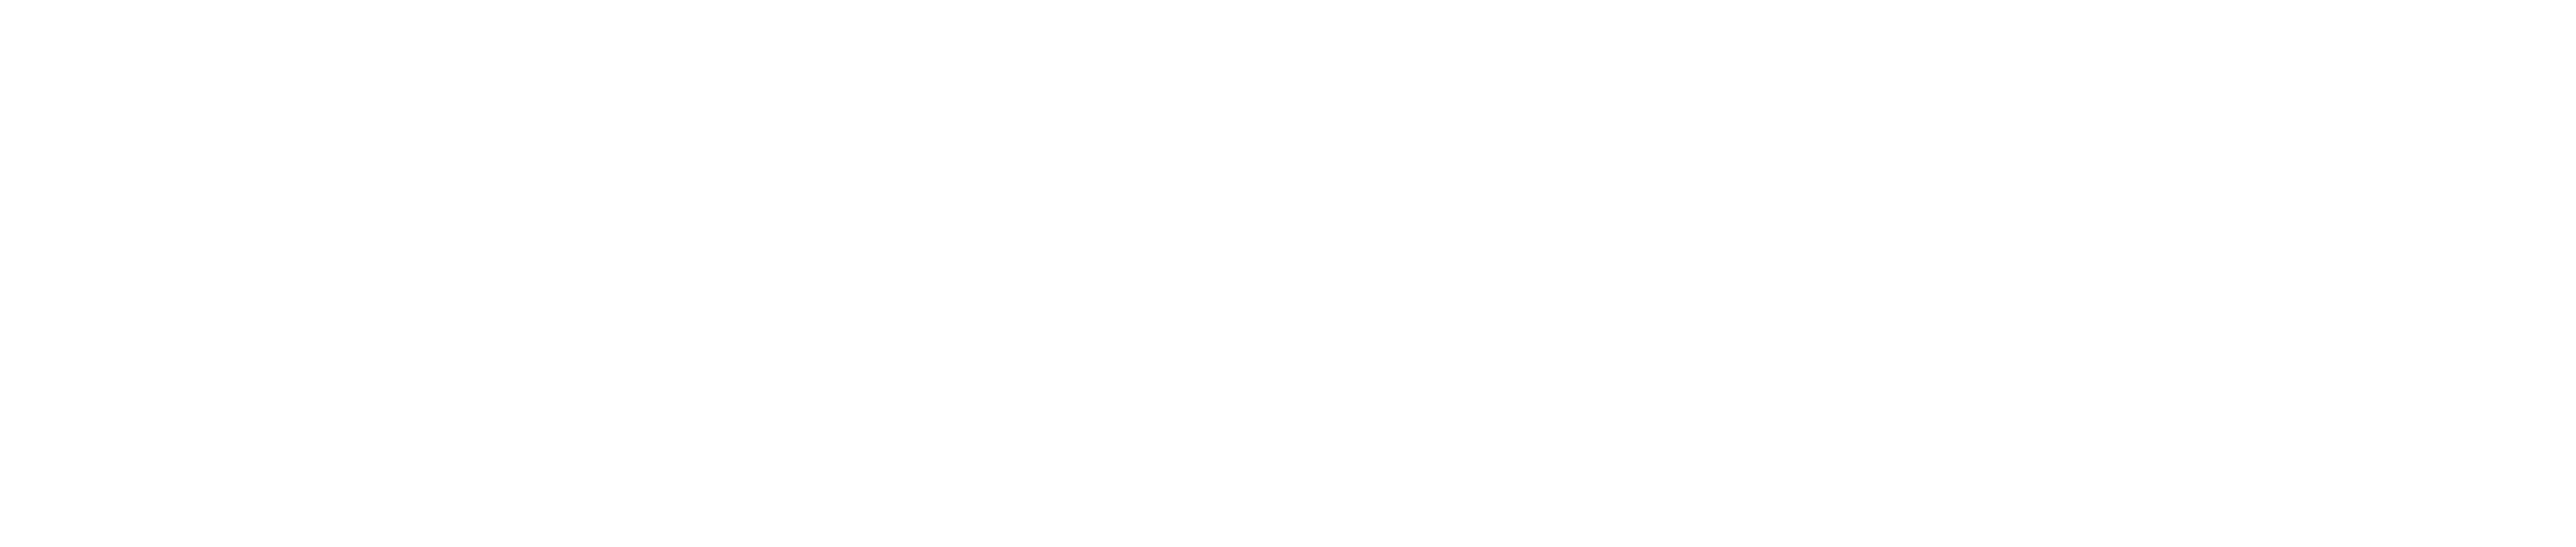 Nordic Medialab